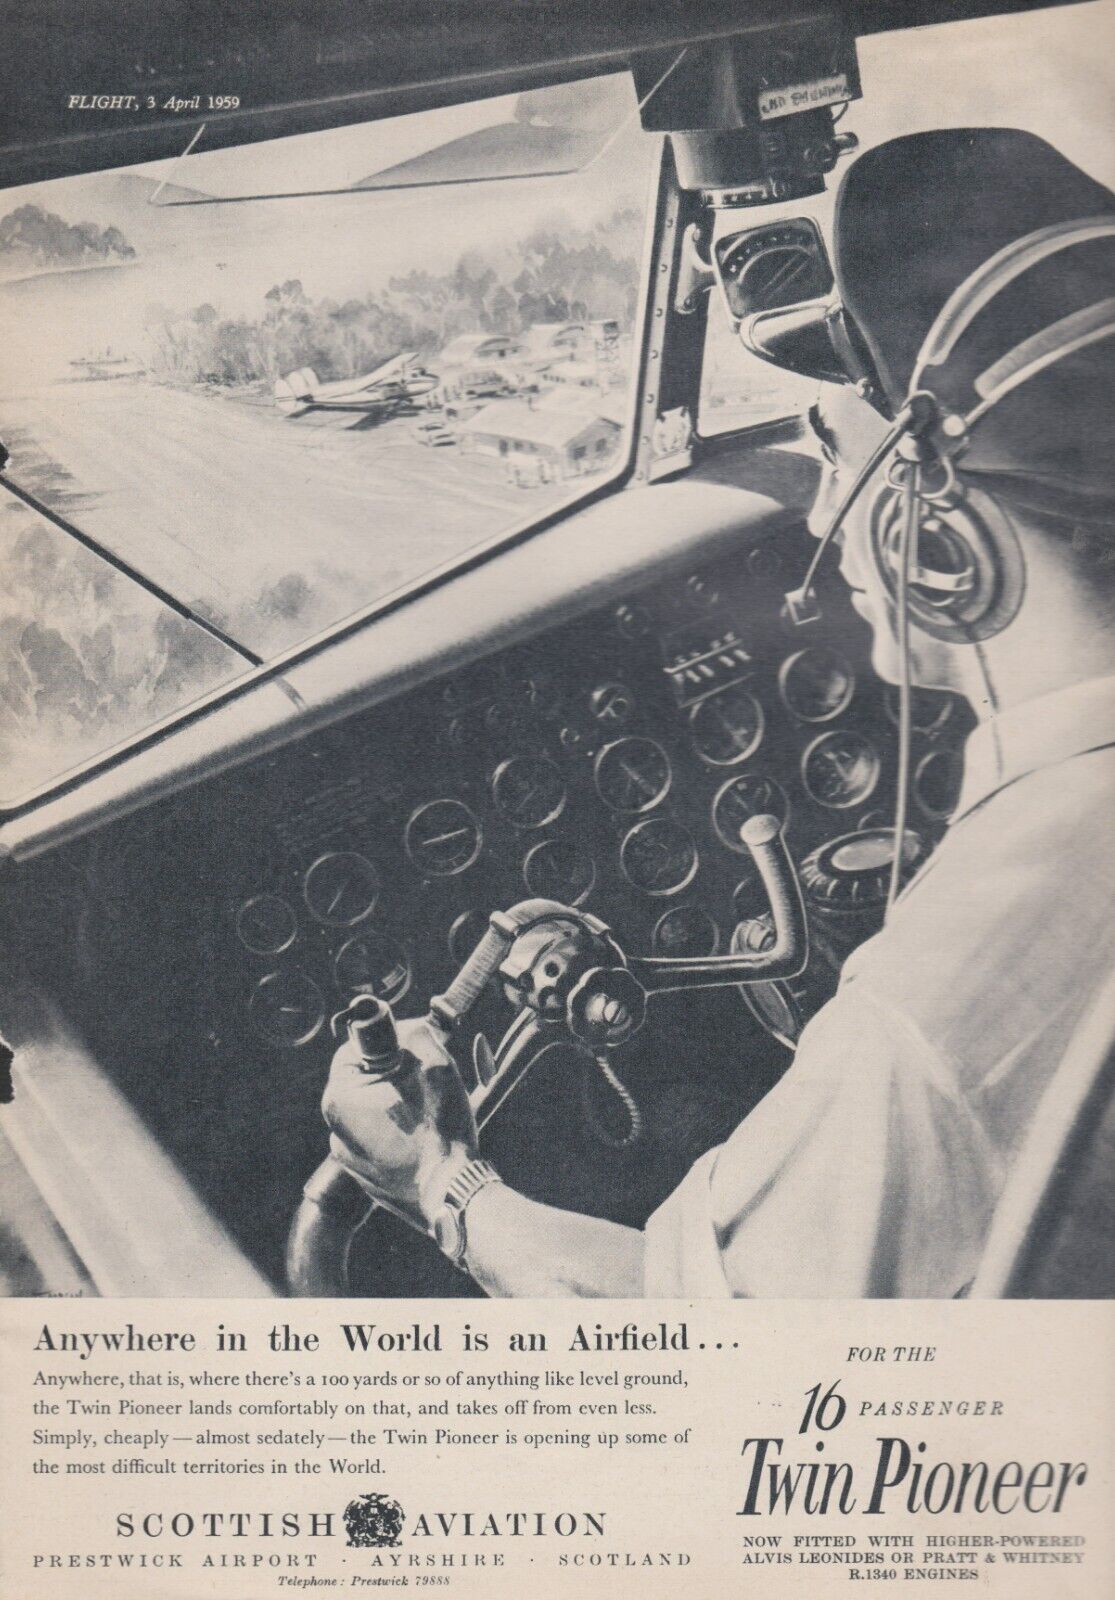 Aviation Magazine Print - Scottish Aviation Twin Pioneer Airliner (1959)